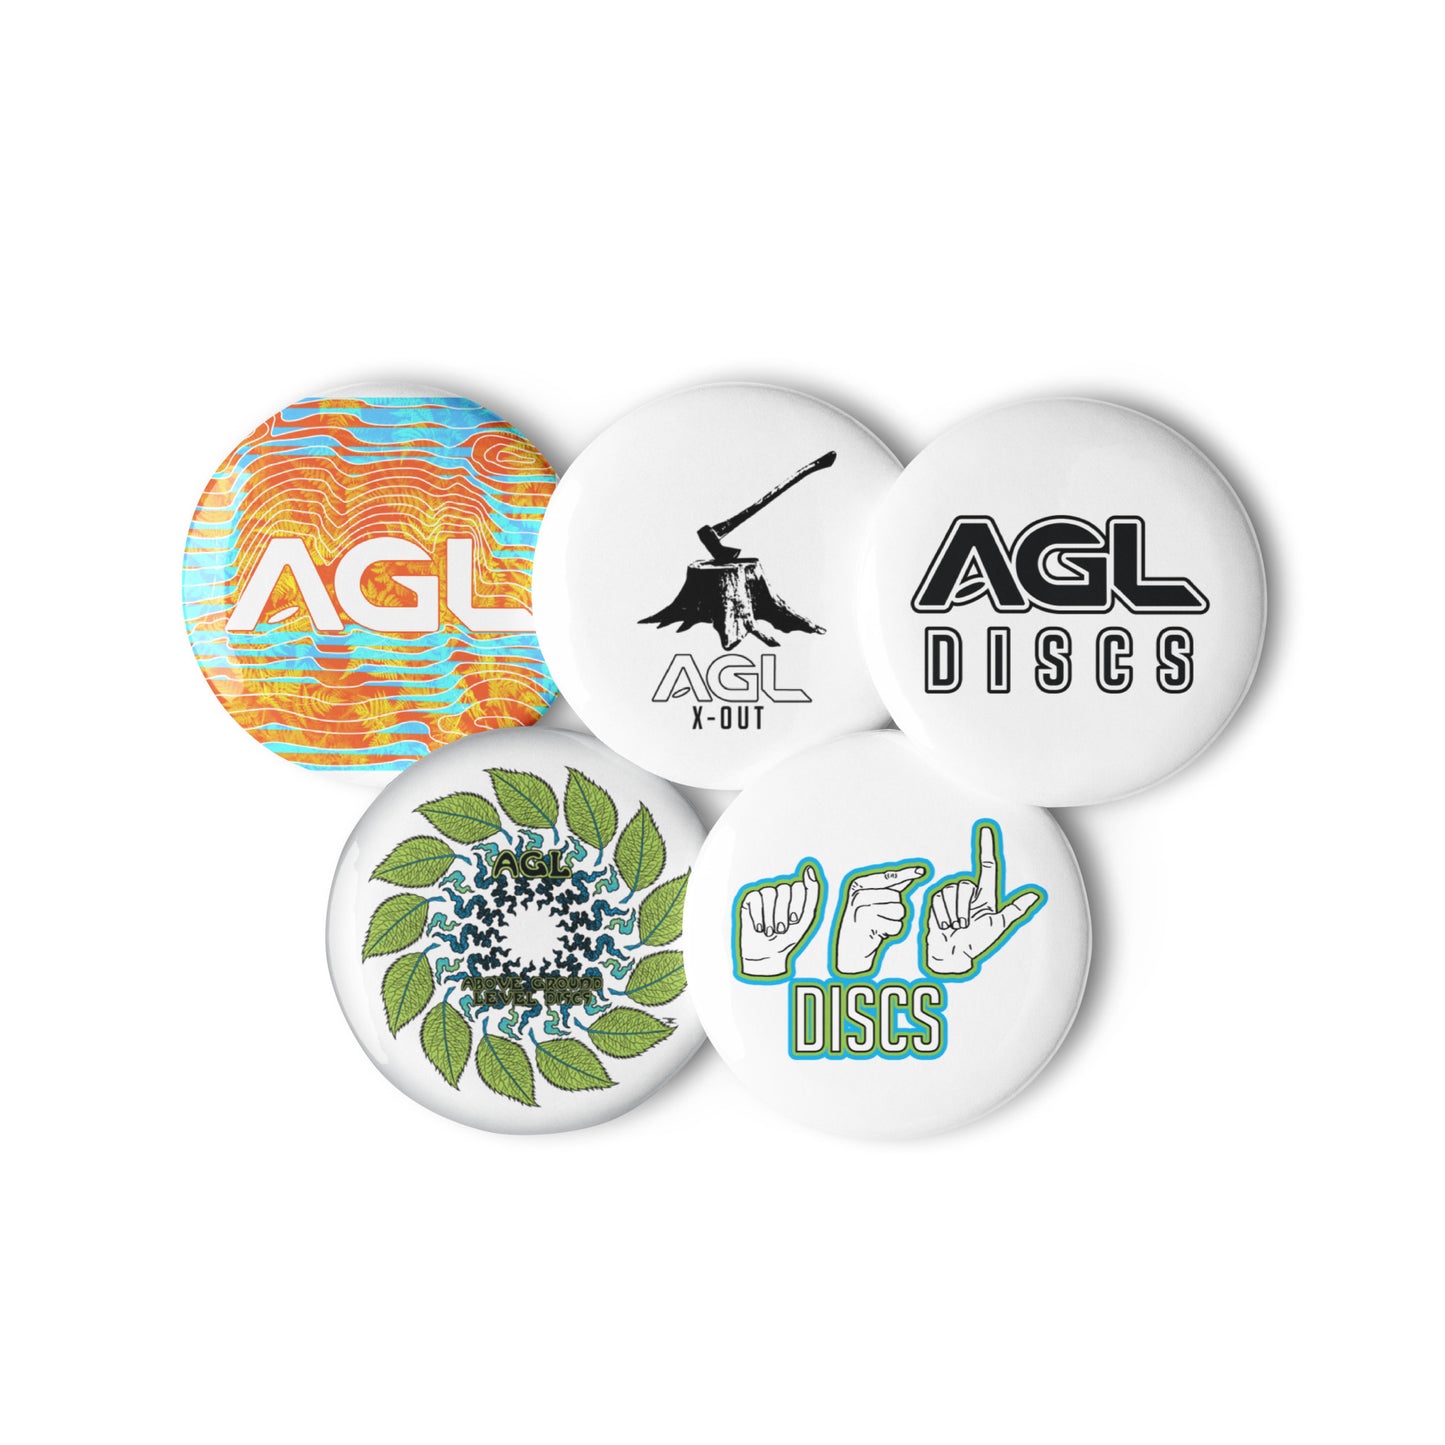 AGL Discs - Buttons (Set 2)